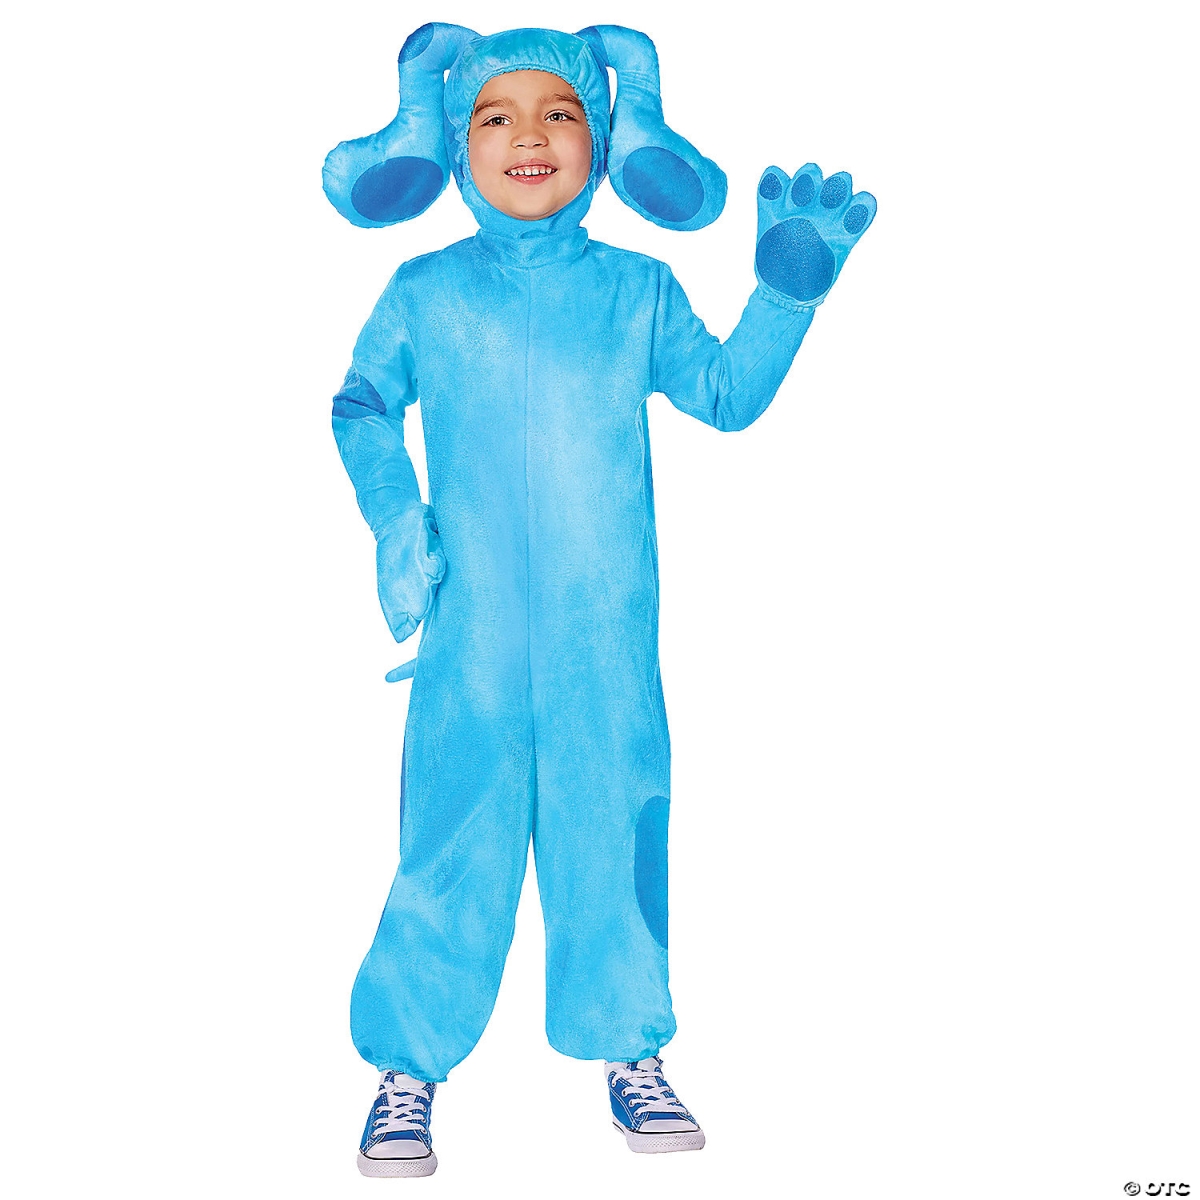 Fun-World Fun World FW106011S Toddler Blues Clues Blue Costume - Small 3T-4T